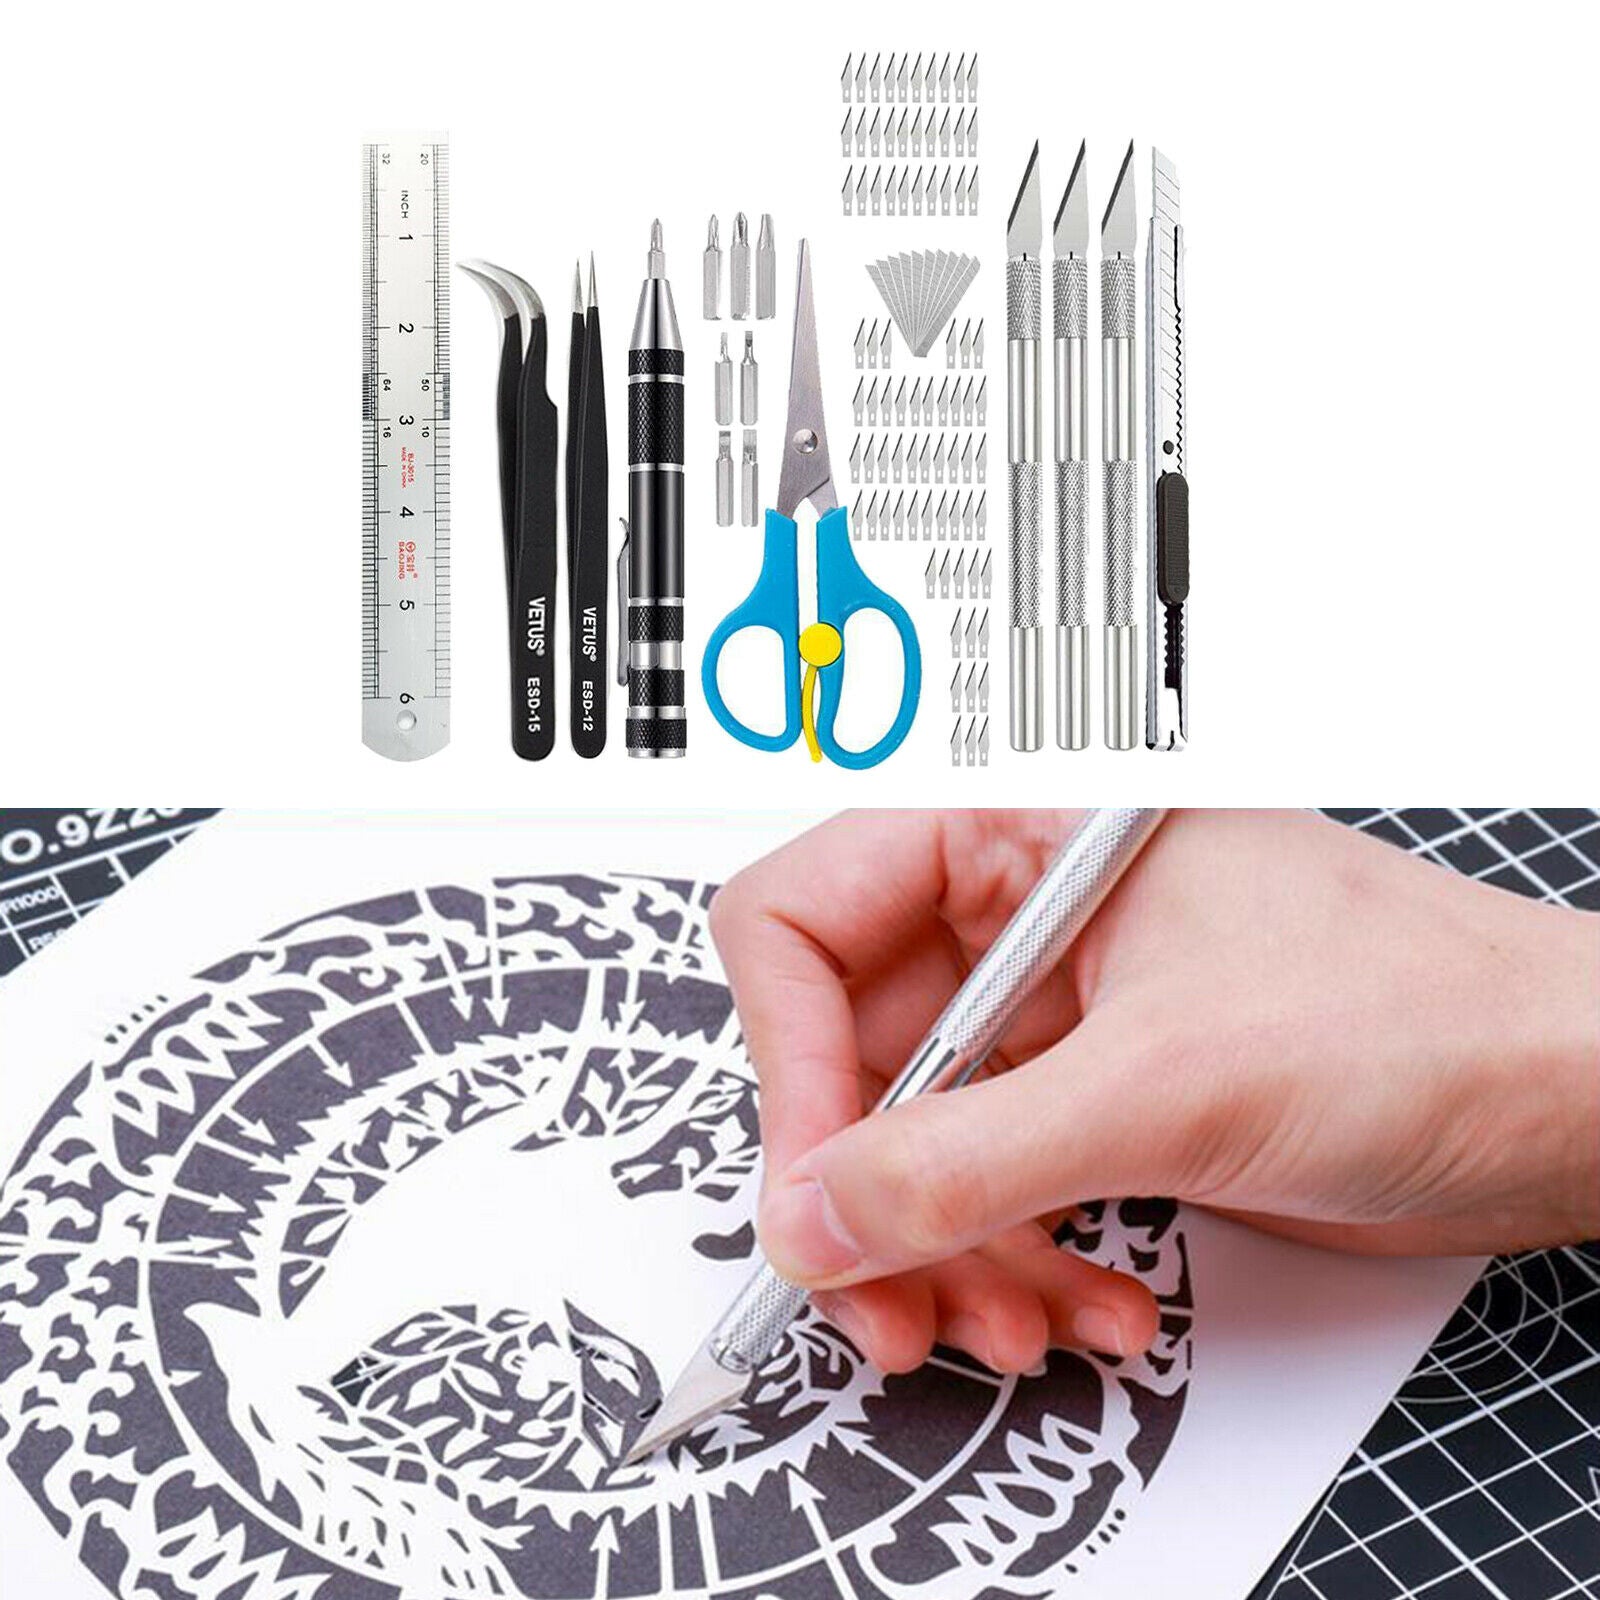 105x Precision Carving Craft Hobby  Kit & Blade,Steel Ruler,SK5 Art  w/ Blade,7